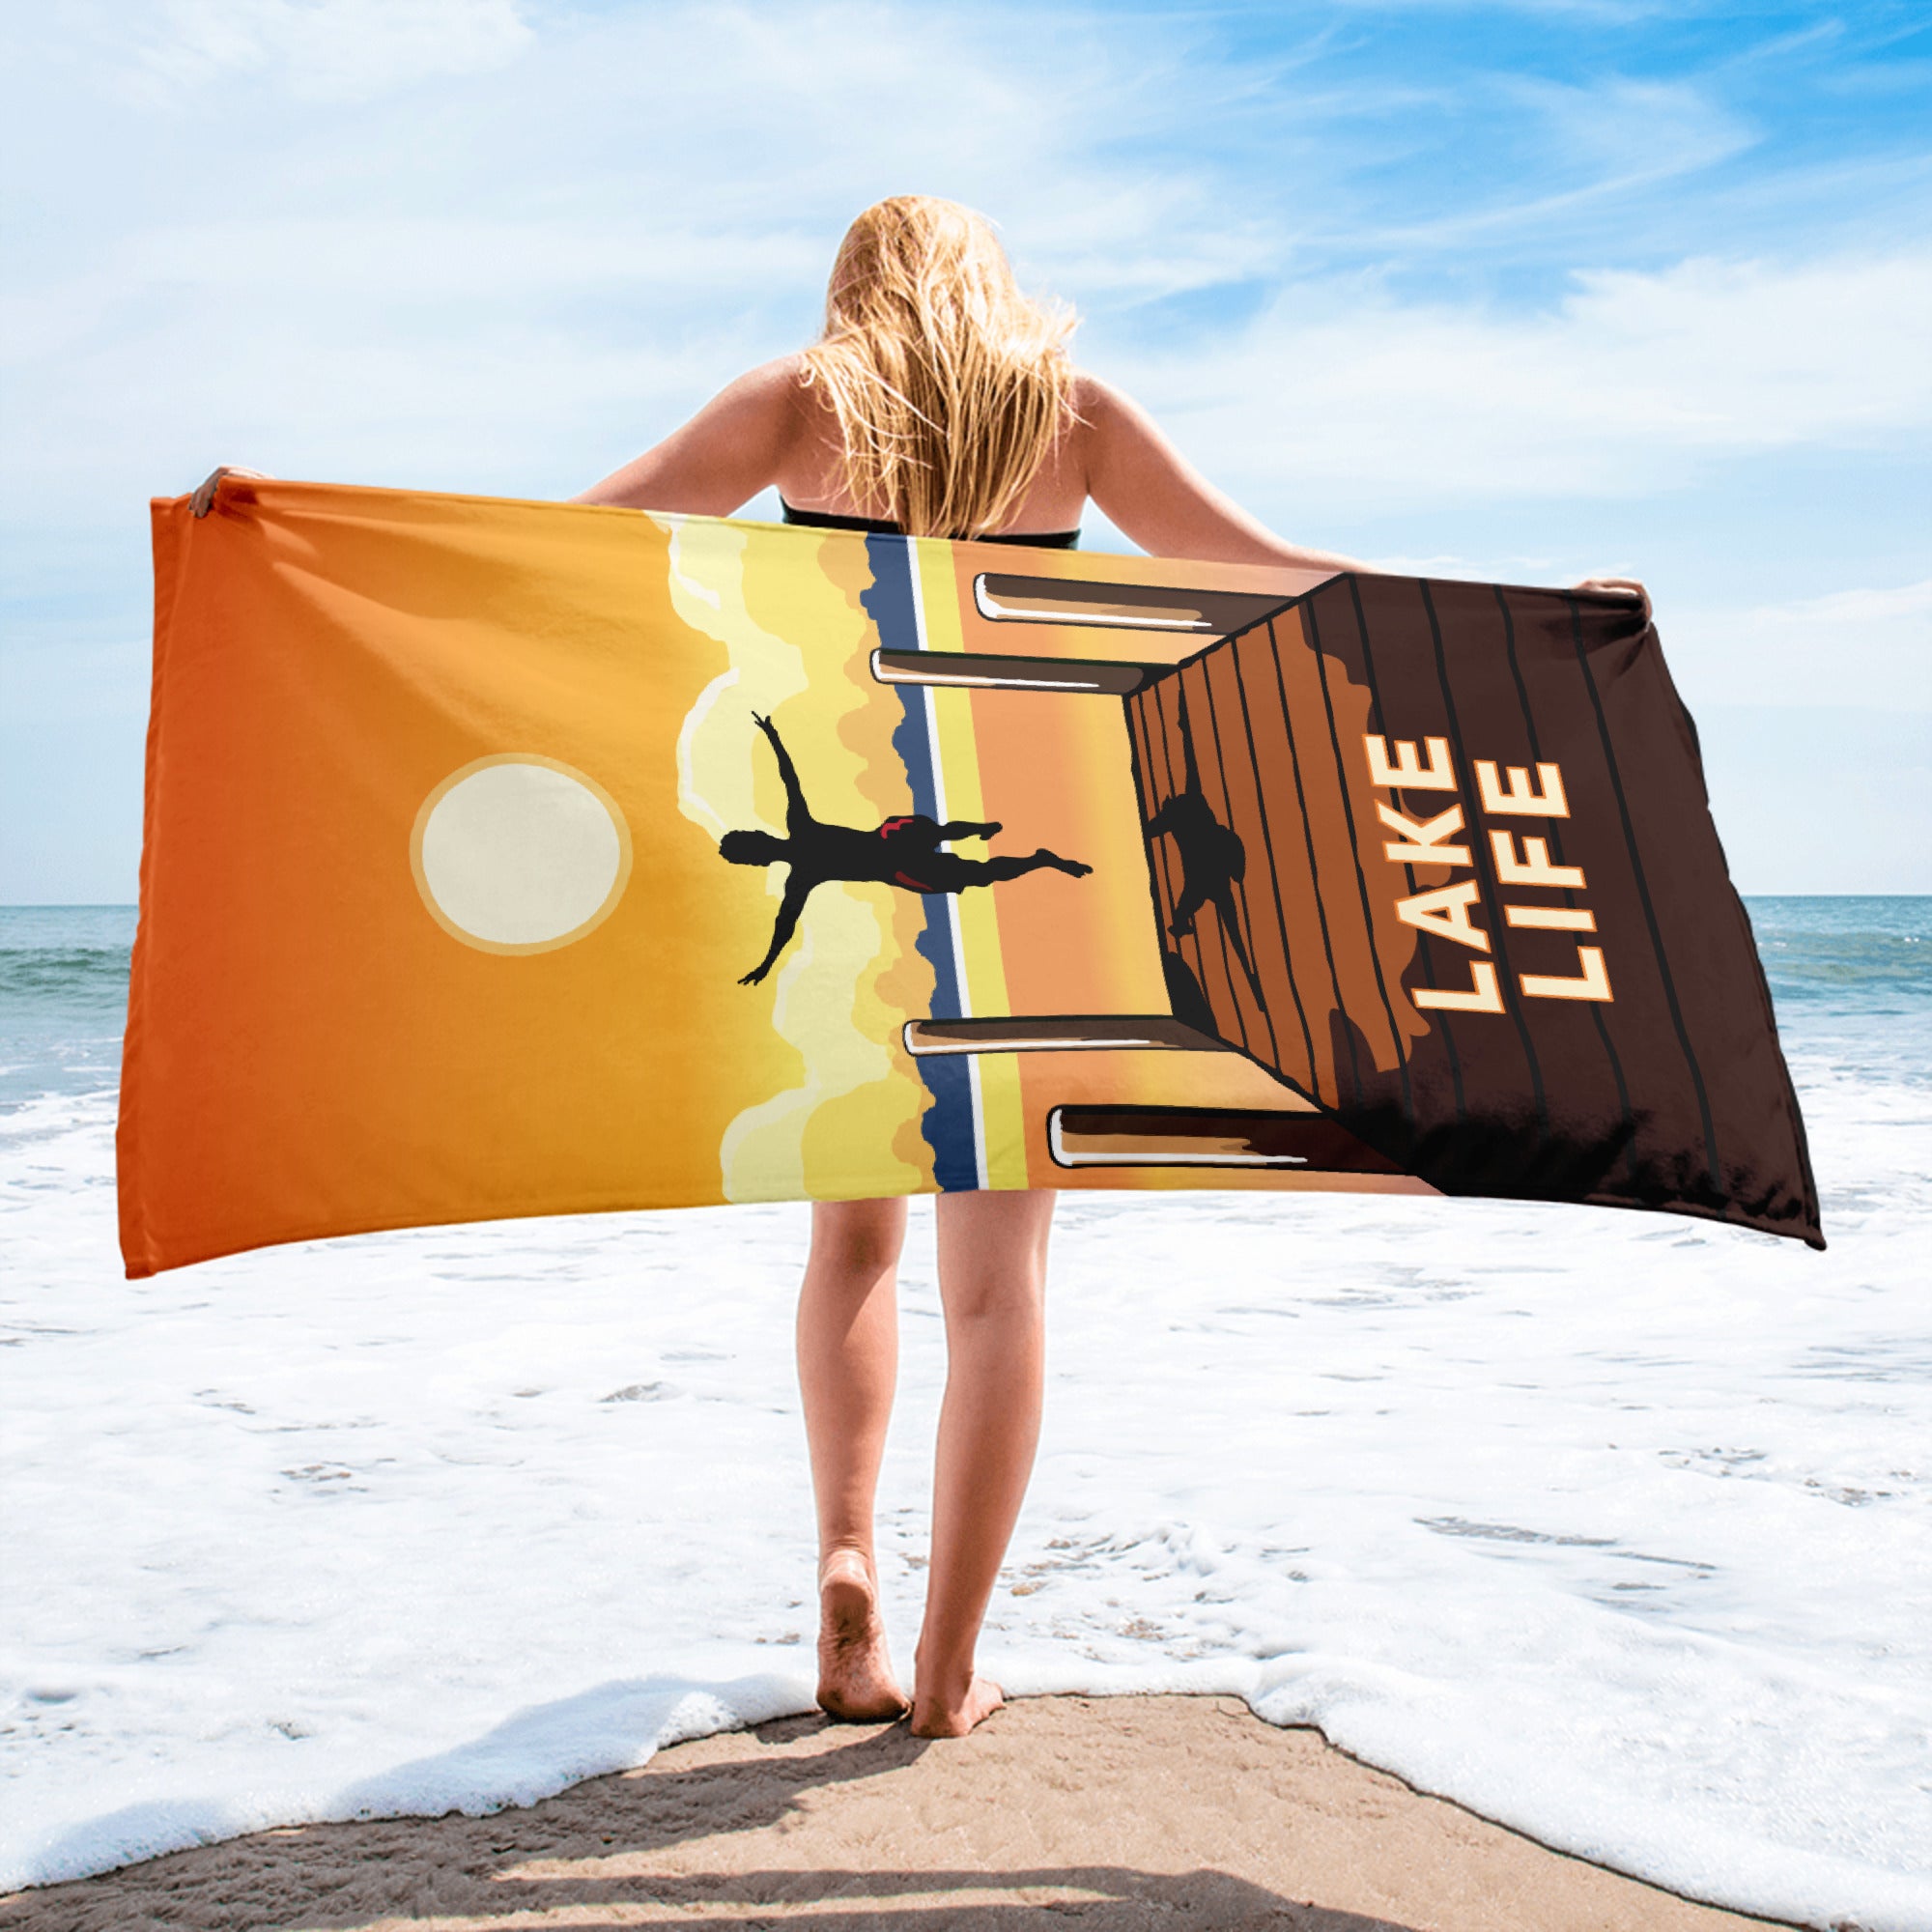 Landmark MN | Lake Life Beach Towel